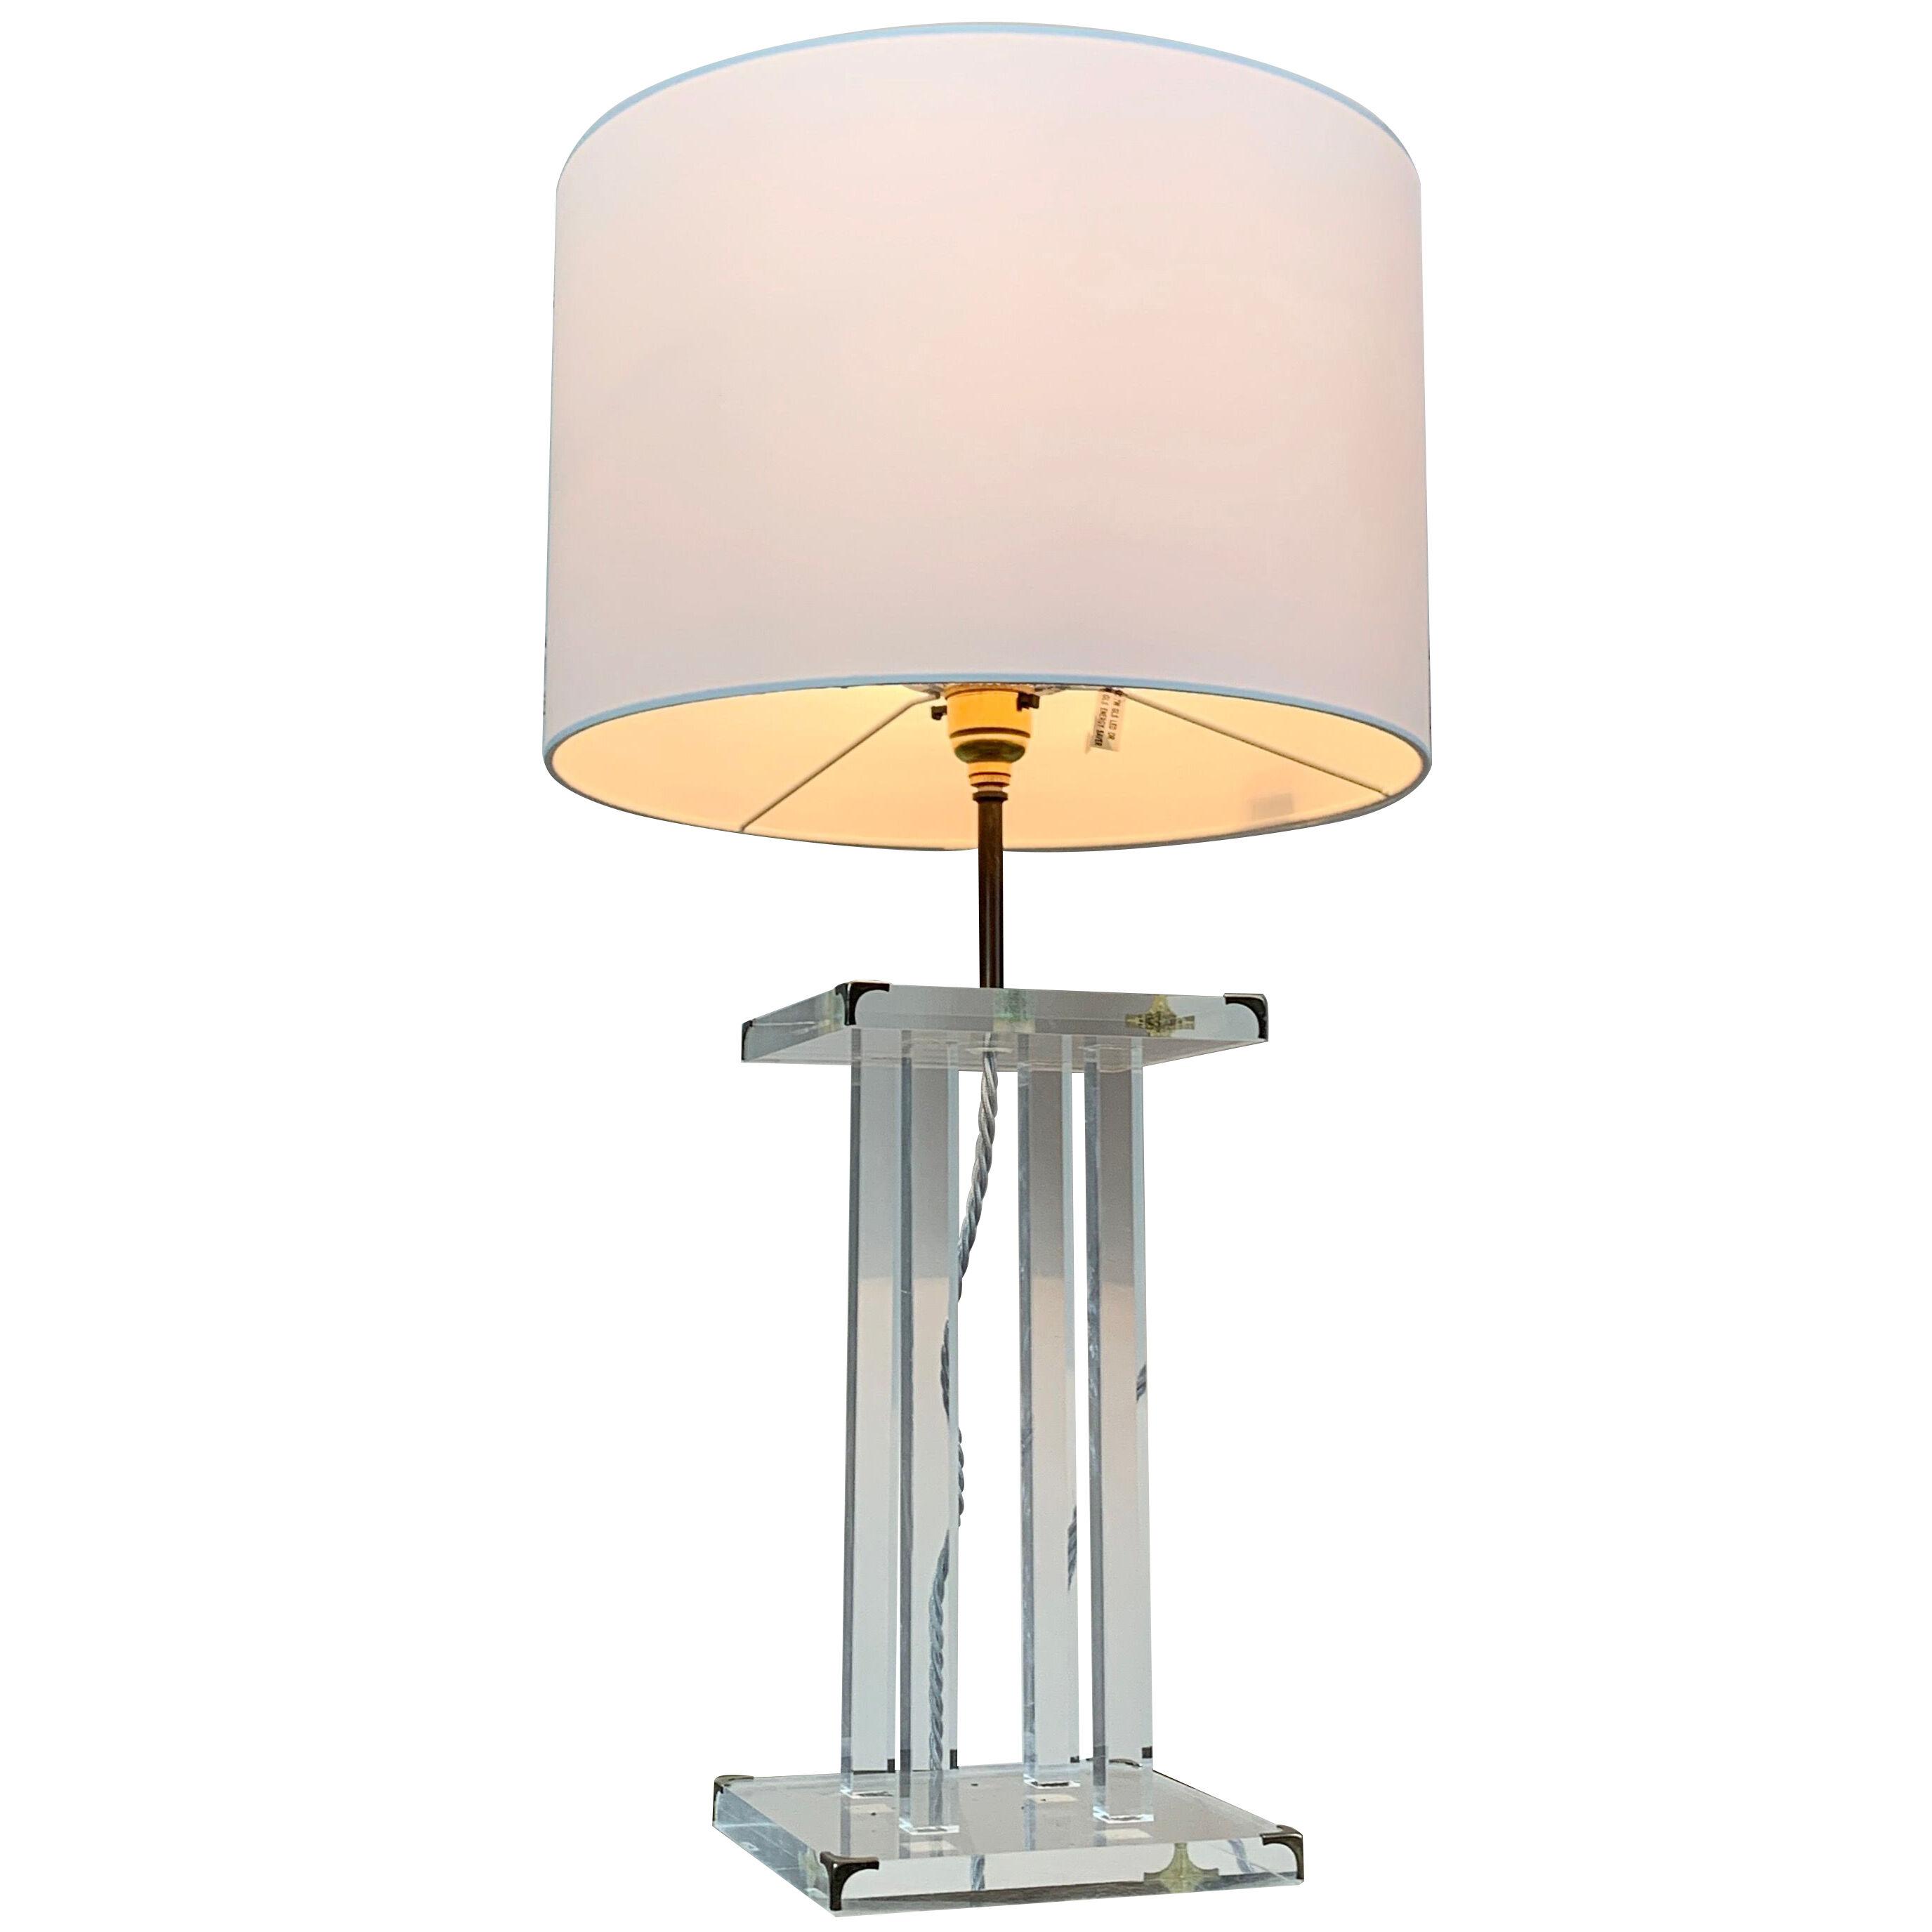 David Lange for Roche Bobois Lucite Table Lamp